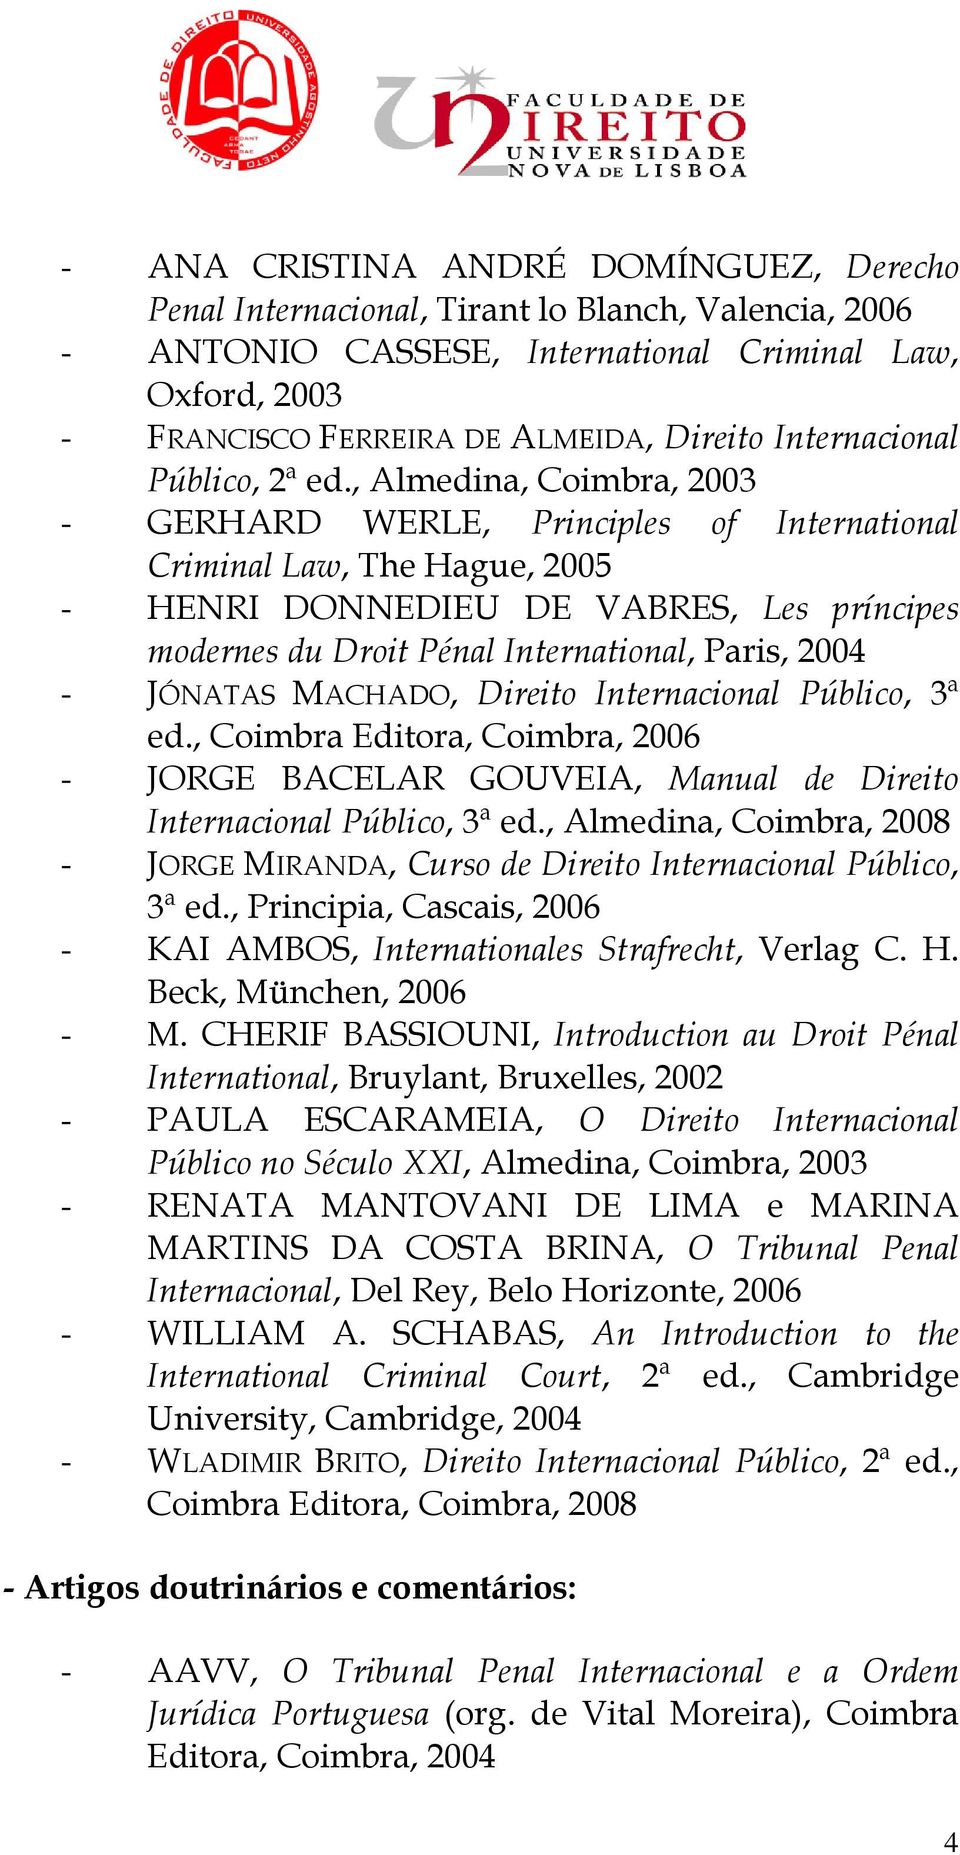 , Almedina, Coimbra, 2003 - GERHARD WERLE, Principles of International Criminal Law, The Hague, 2005 - HENRI DONNEDIEU DE VABRES, Les príncipes modernes du Droit Pénal International, Paris, 2004 -